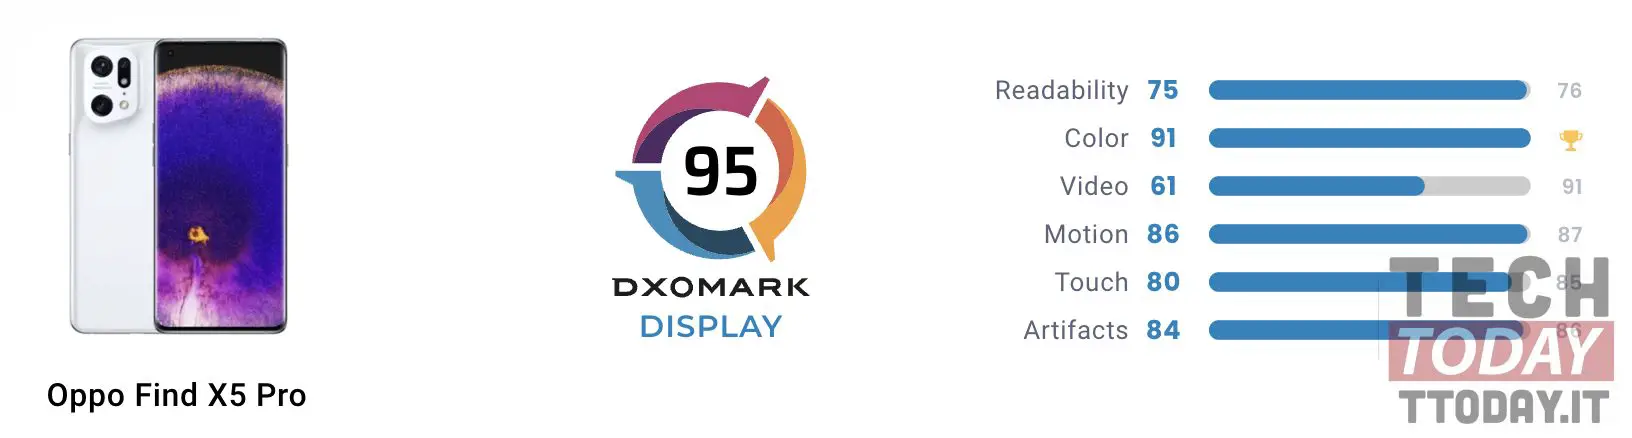 oppo find x5 pro display dxomark